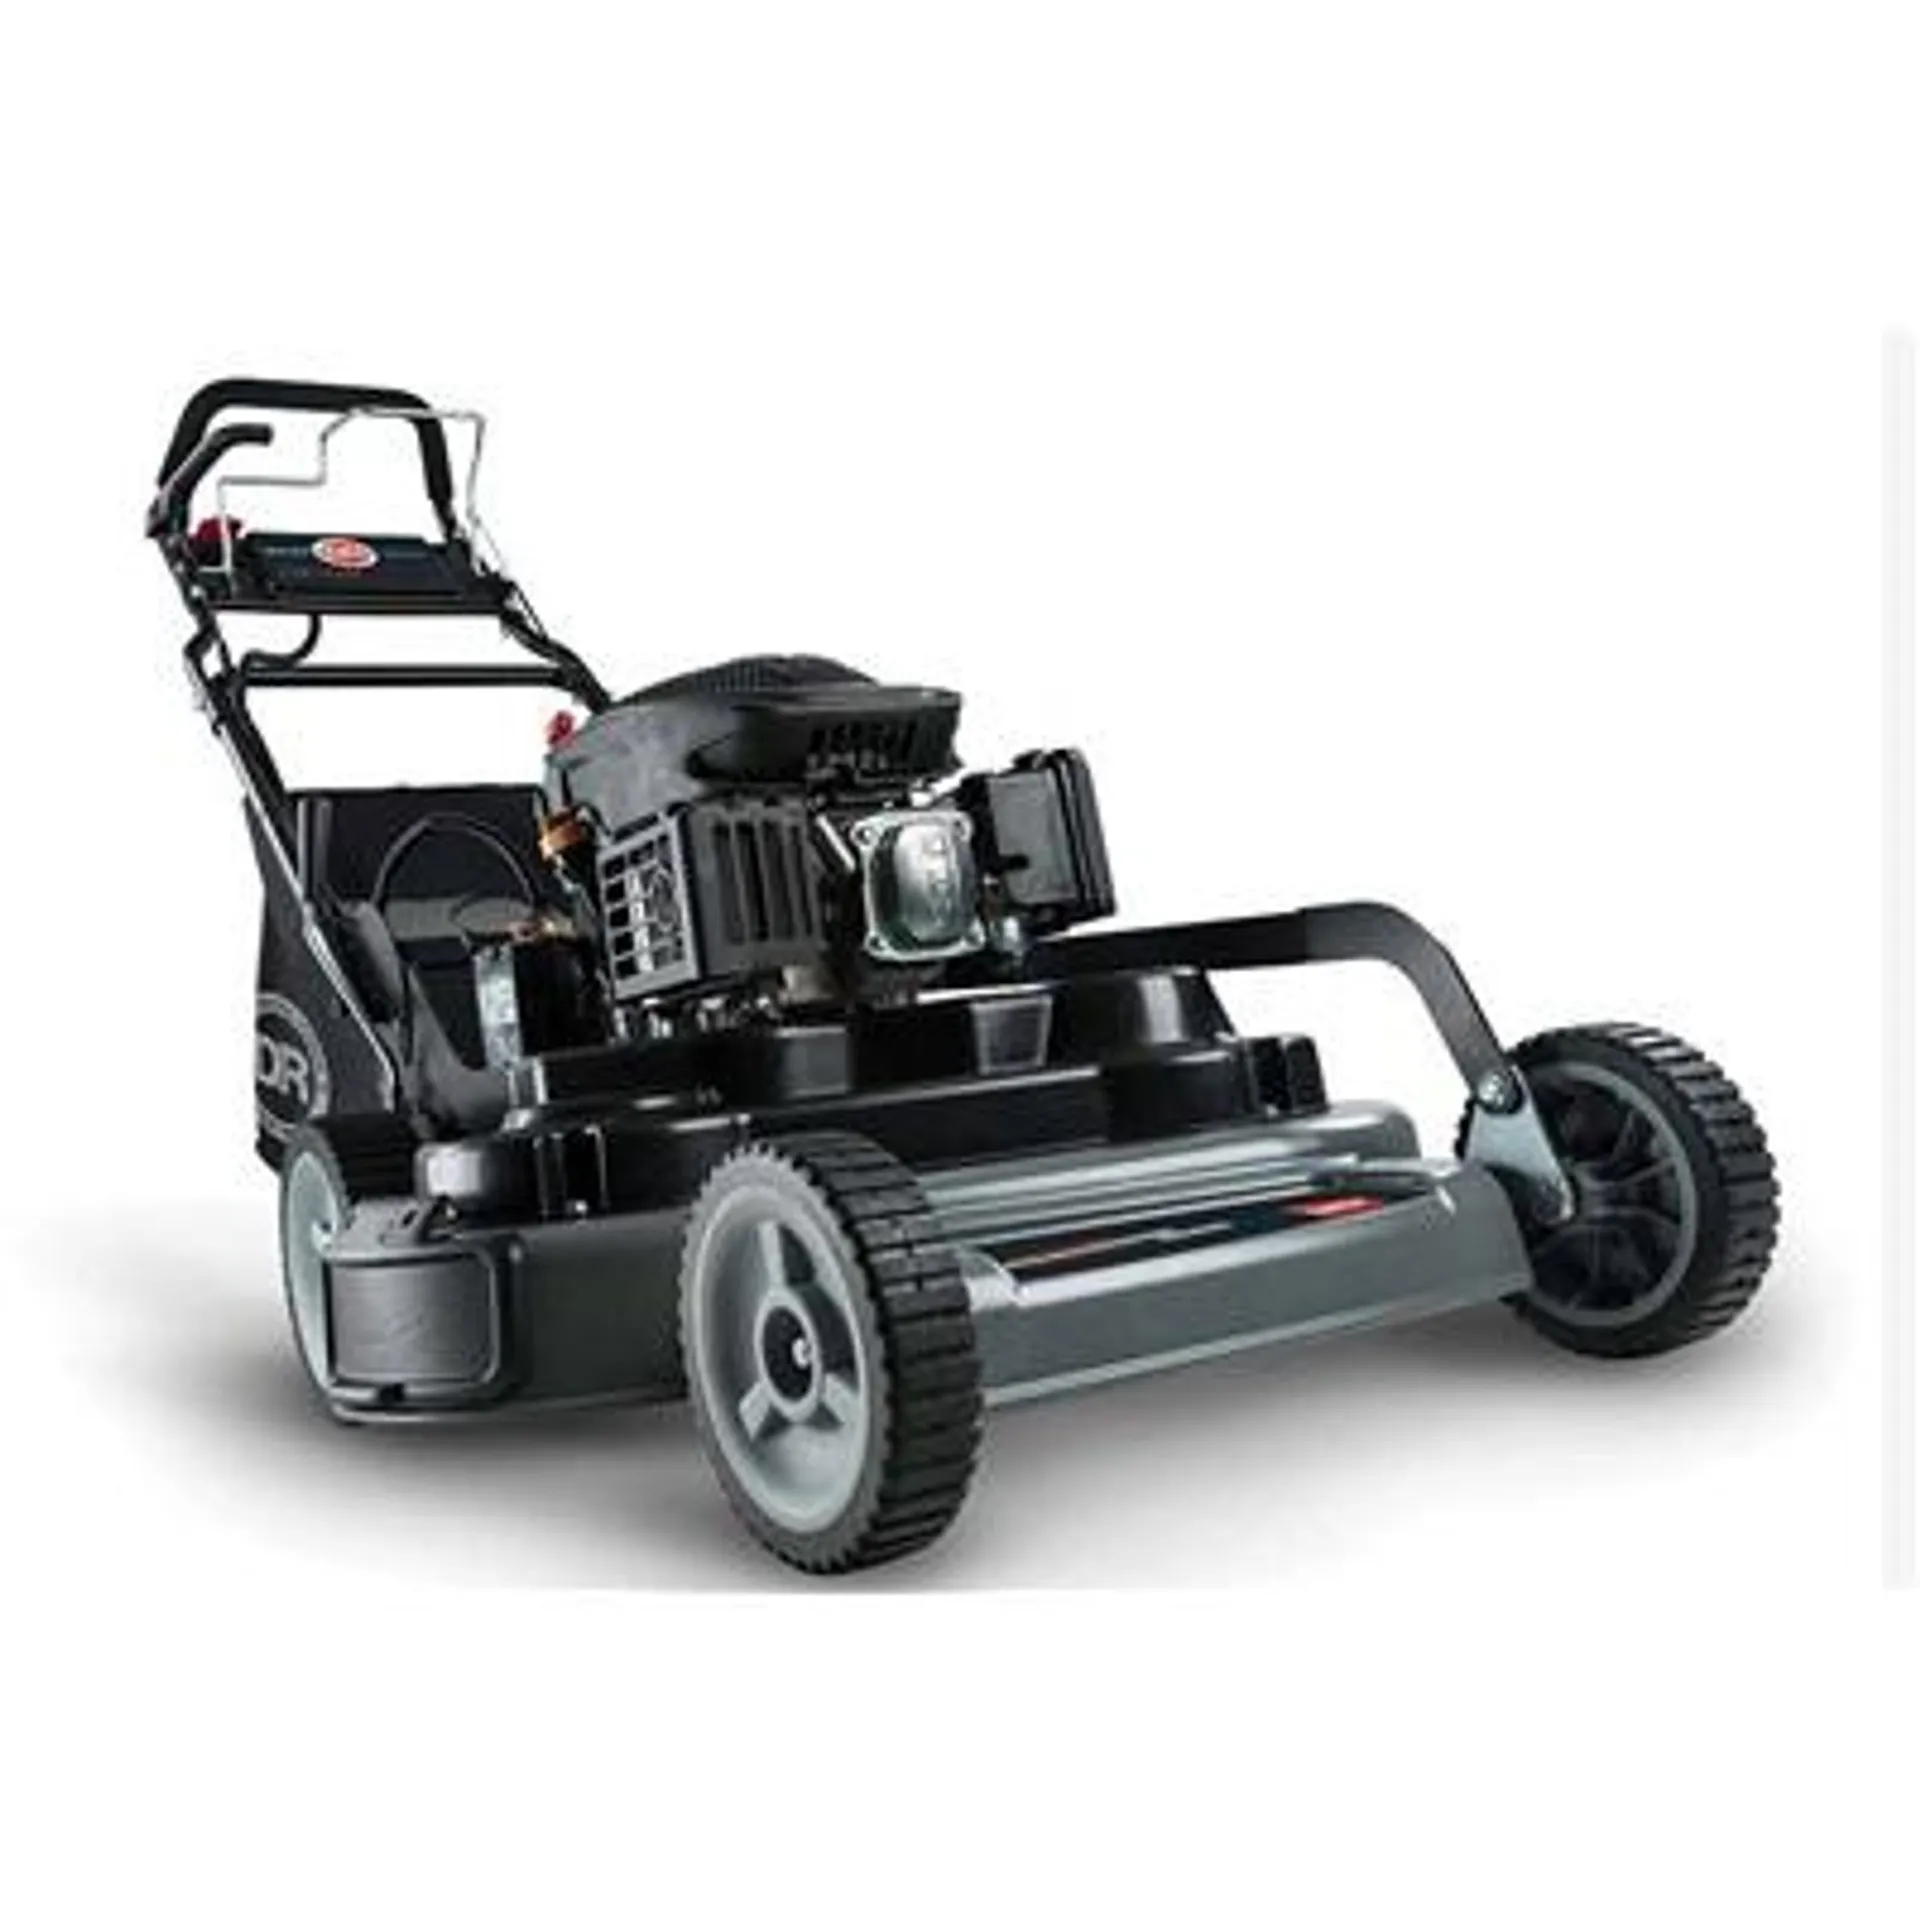 DR Self-Propelled Lawn Mower - 30in wide cut